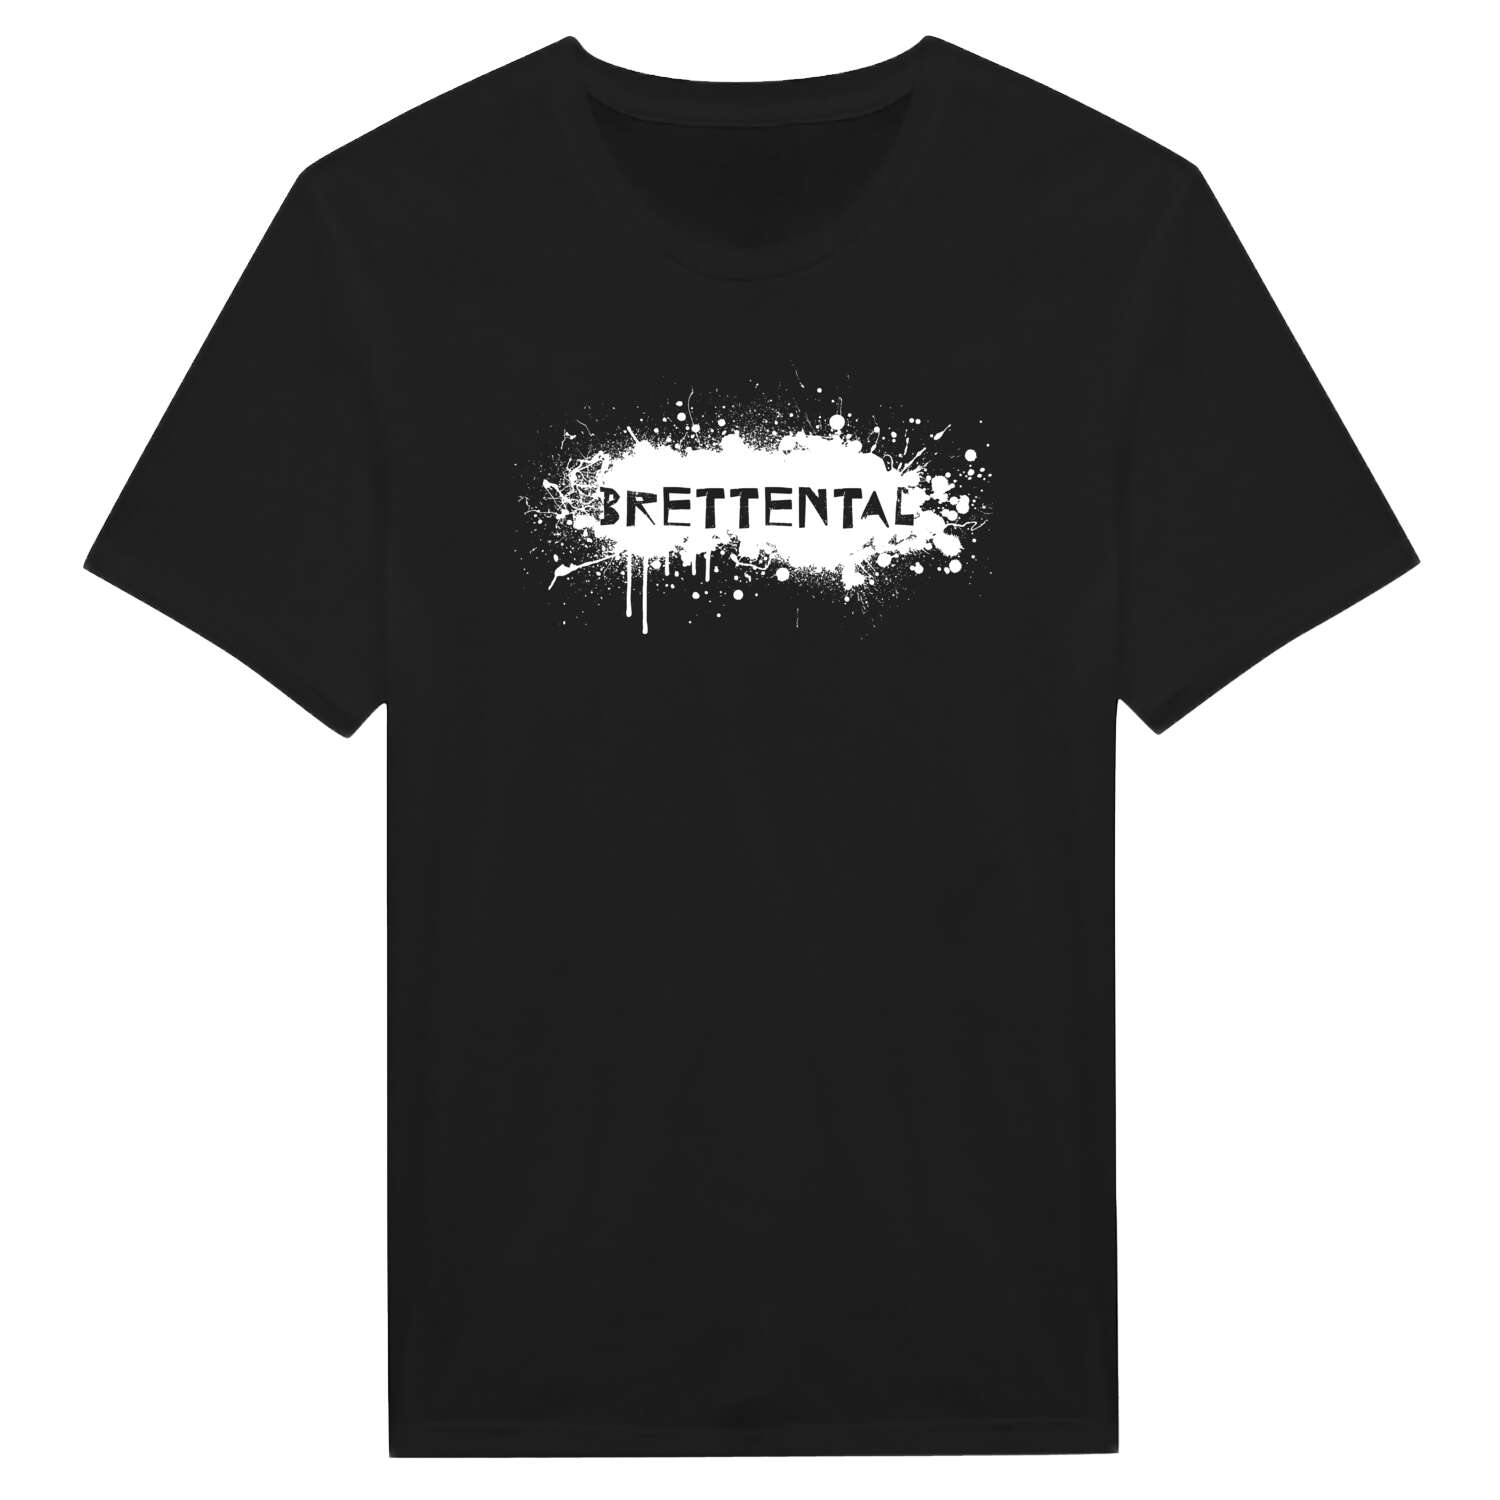 Brettental T-Shirt »Paint Splash Punk«